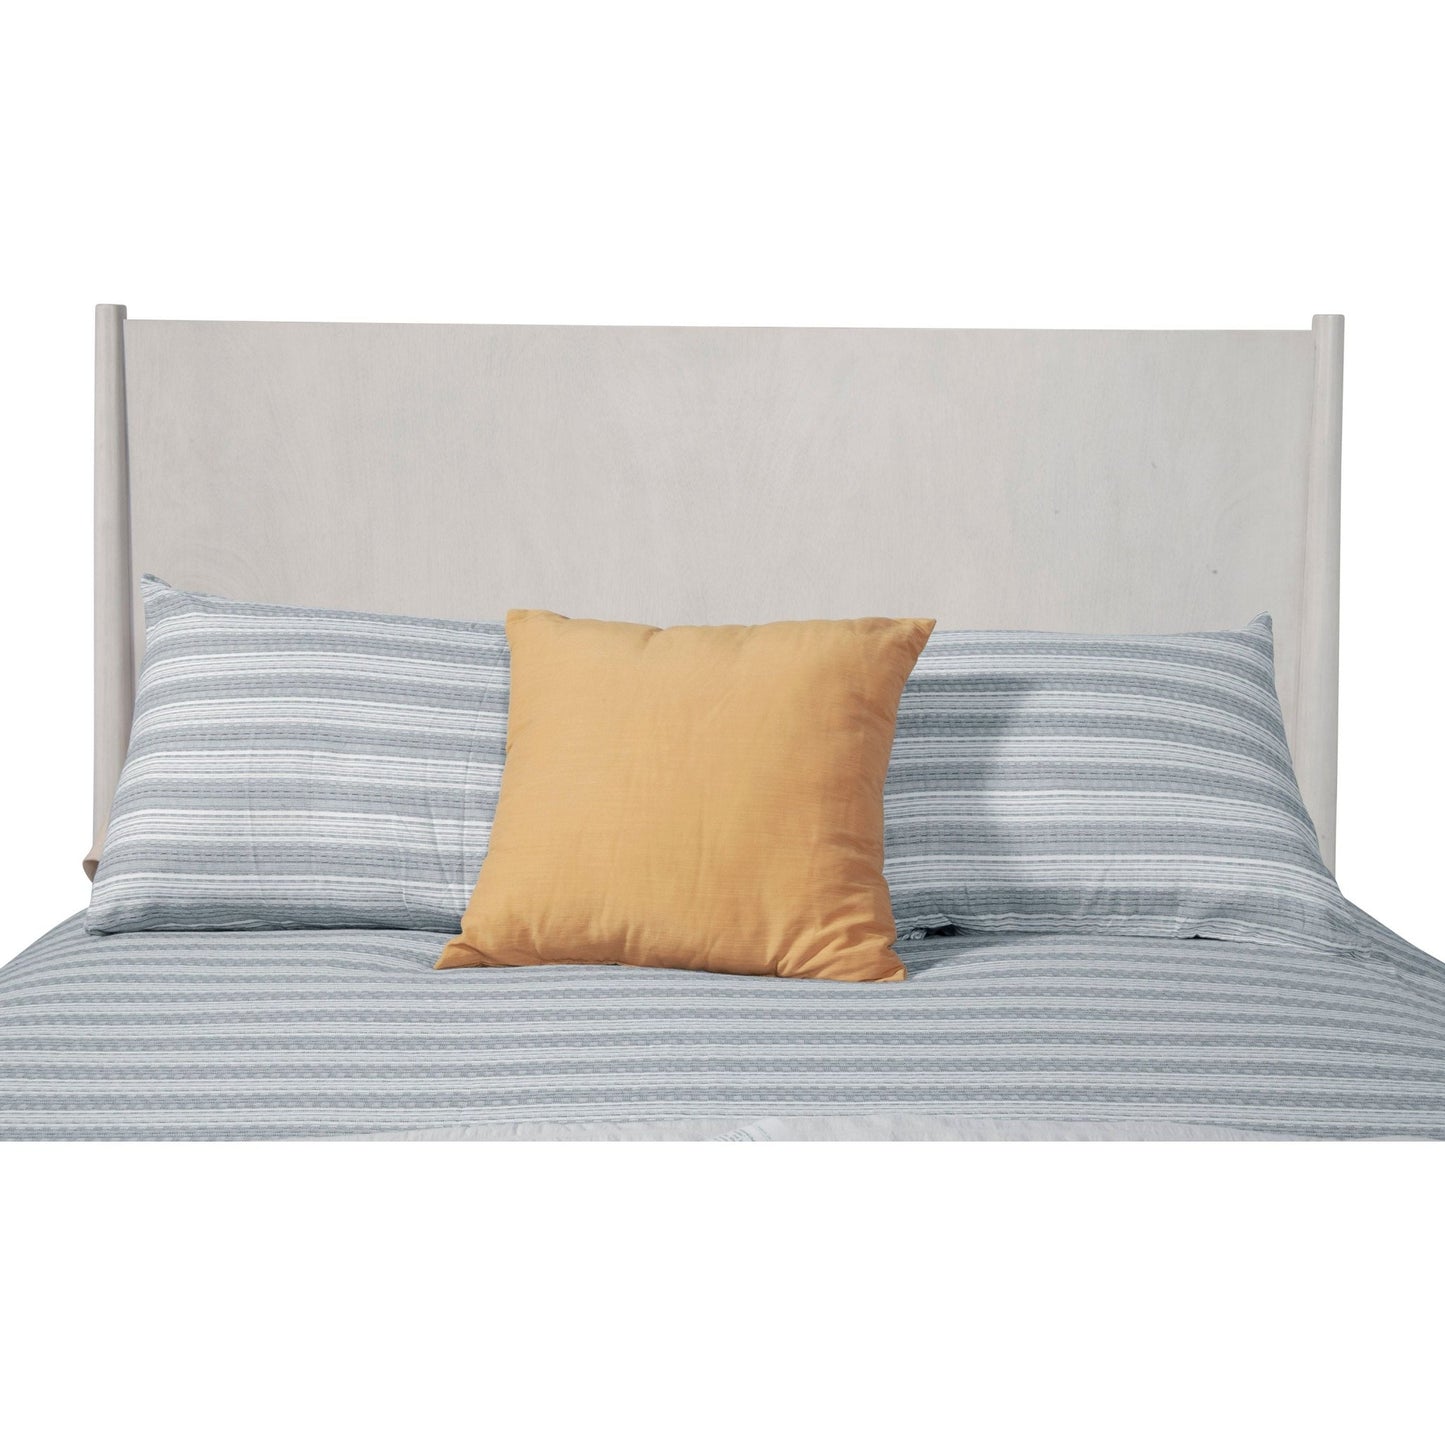 Flynn Panel Bed, Gray - Alpine Furniture